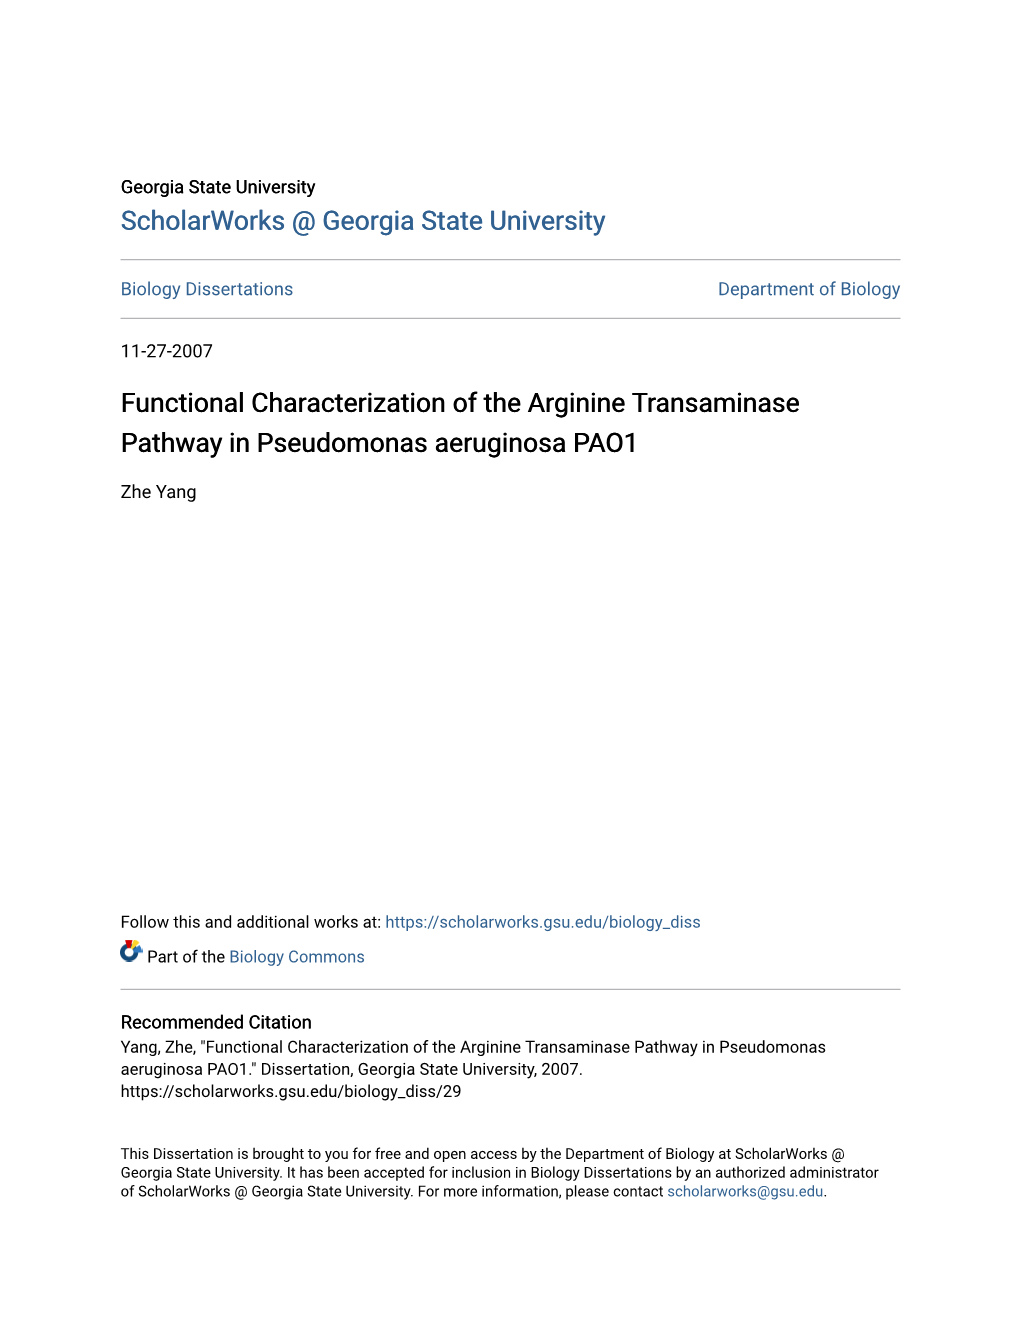 Functional Characterization of the Arginine Transaminase Pathway in Pseudomonas Aeruginosa PAO1